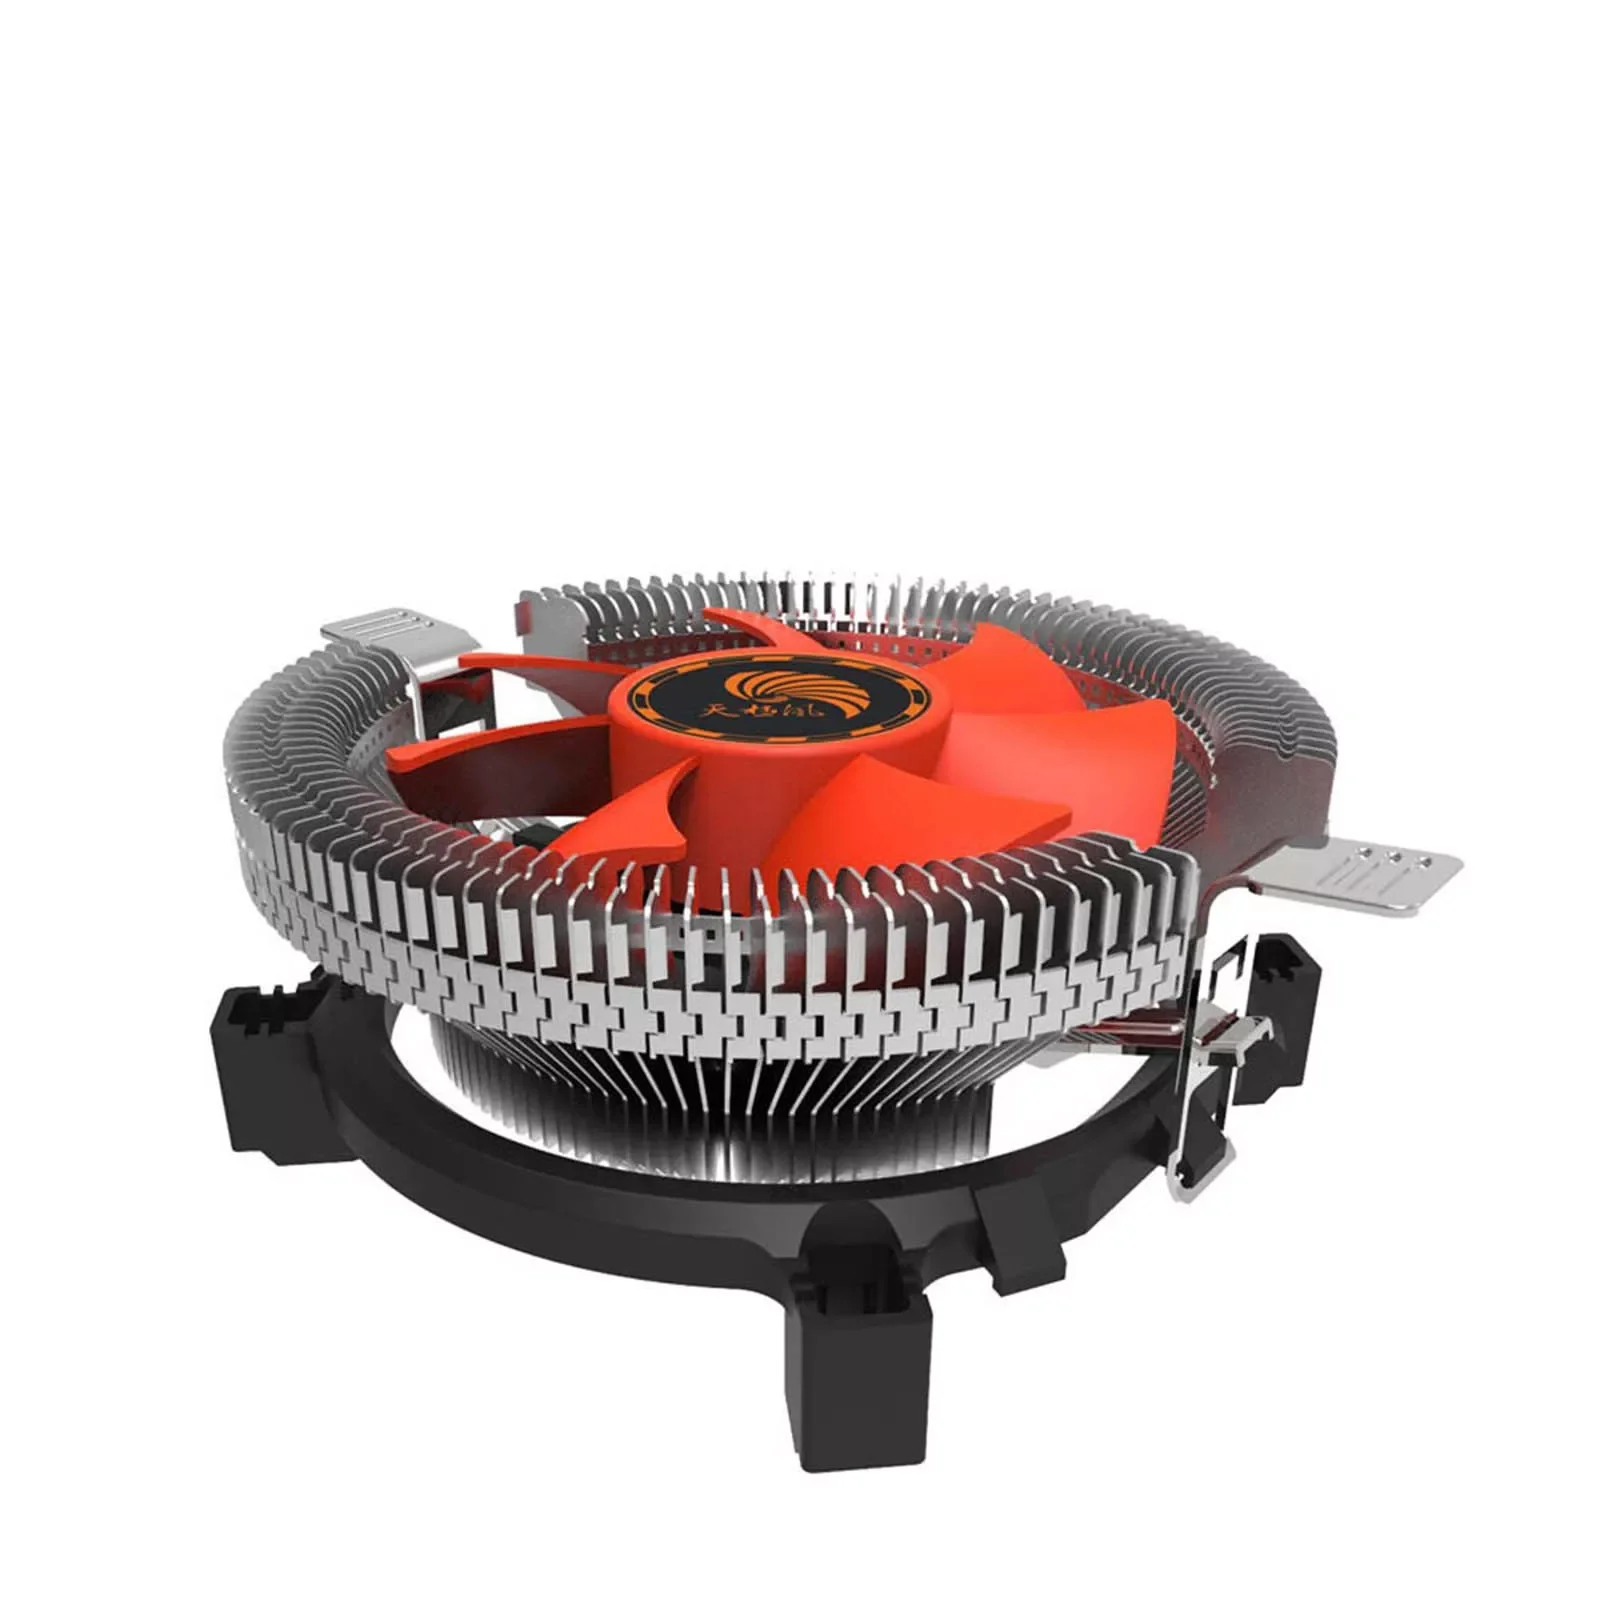 Cpu Cooling Cooler Fan Heatsink Blade For Intel Lga Intel Lga1155/1156 3/i5 Mining Accessories